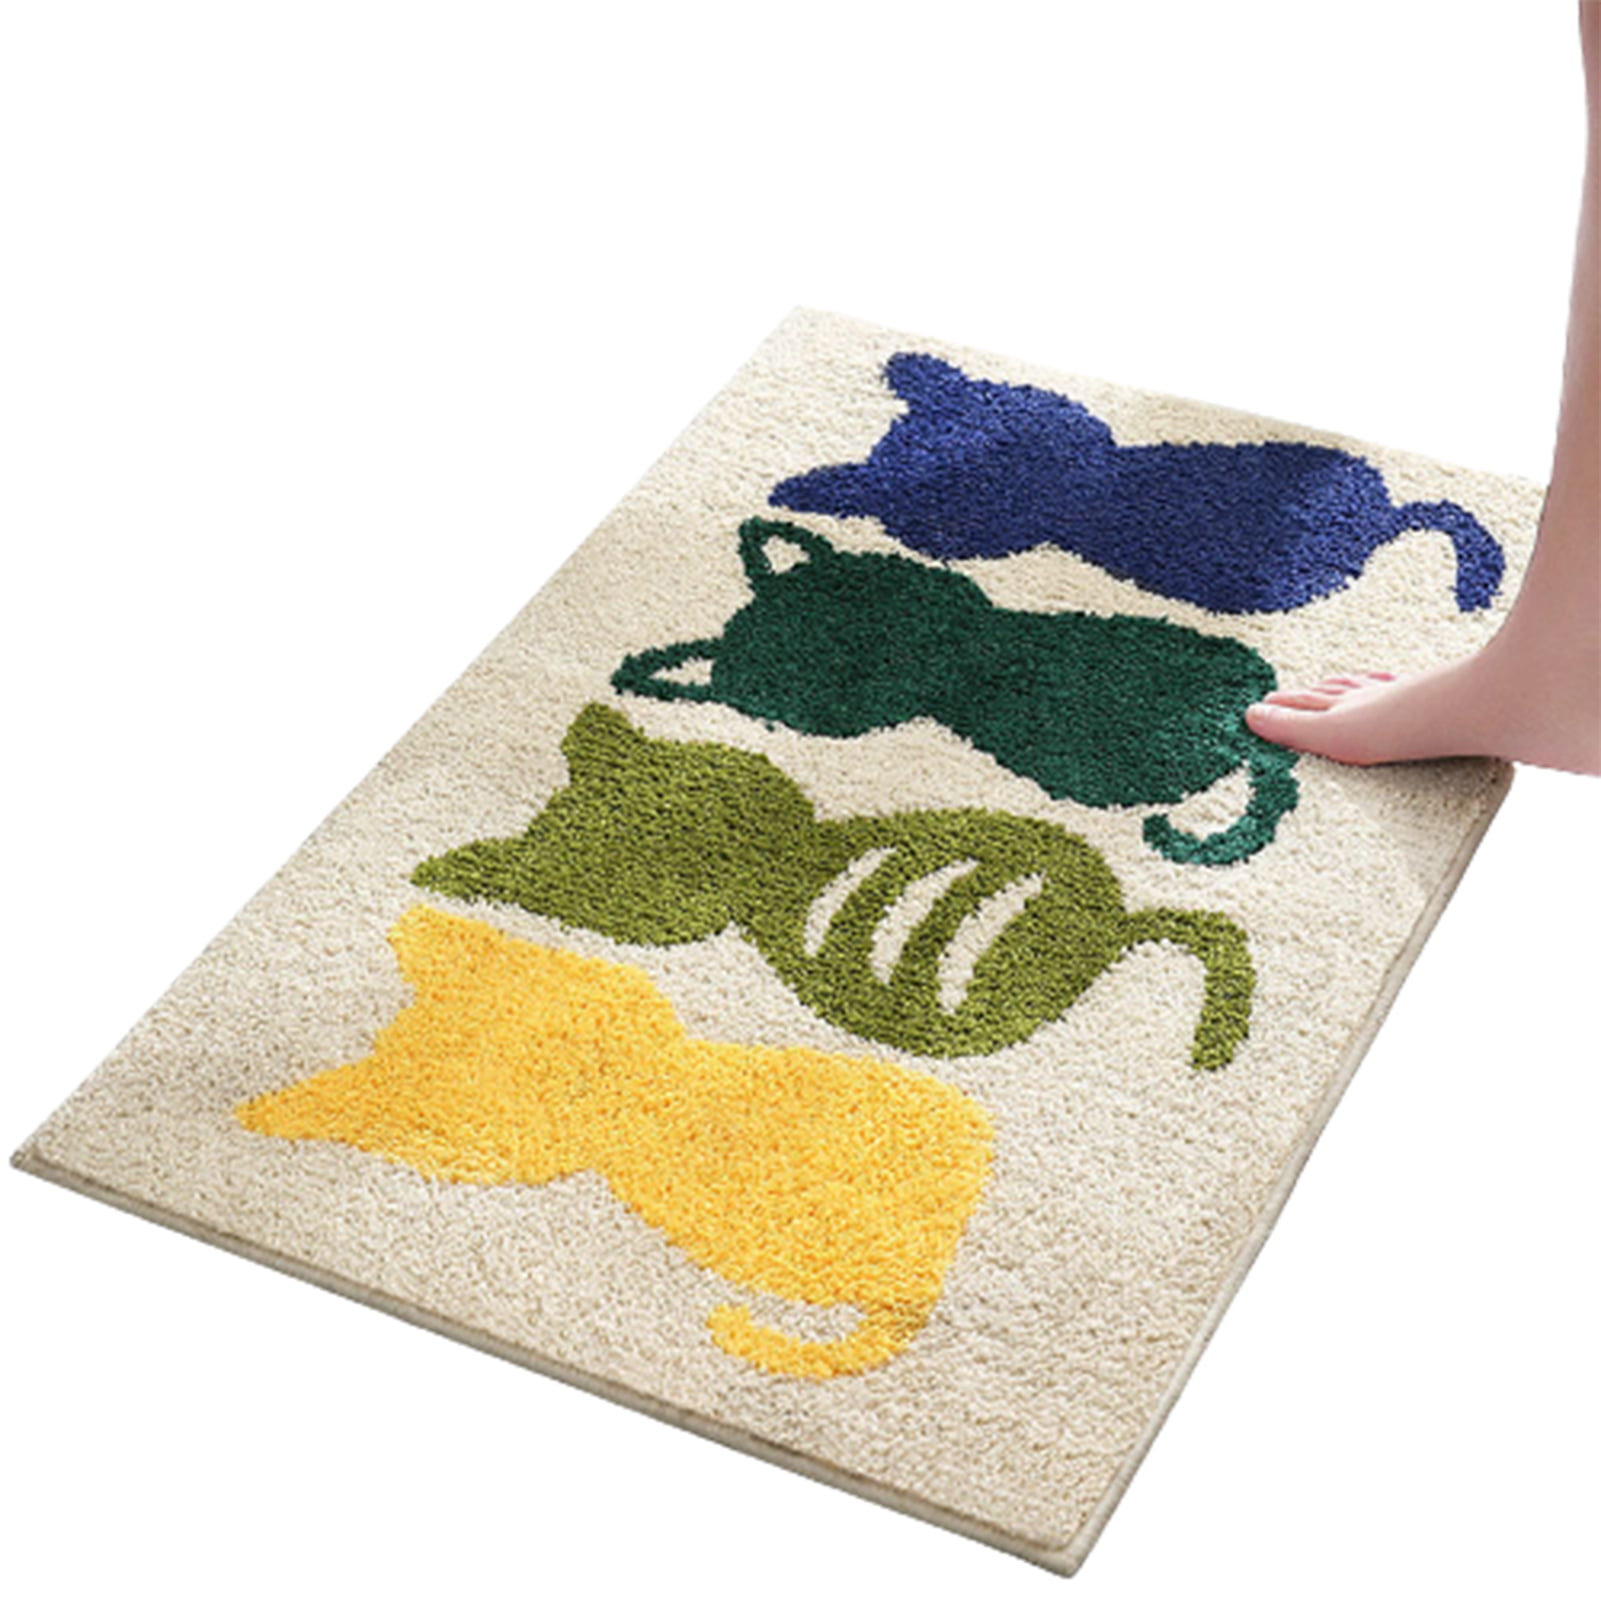 Retro Pirate Ship Home Floor Memory Foam Carpet Decor Rug Non-slip Door Bath Mat 